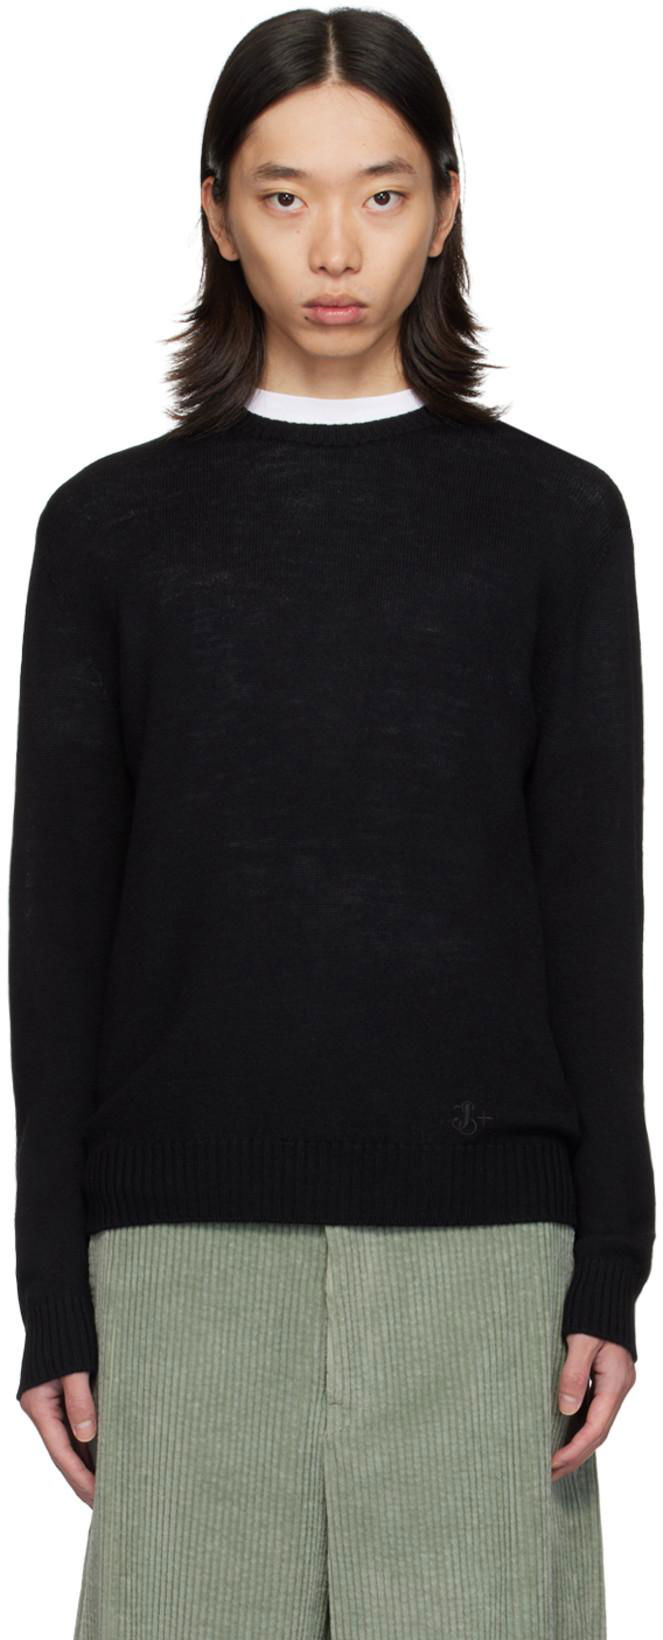 Black Crewneck Sweater by JIL SANDER